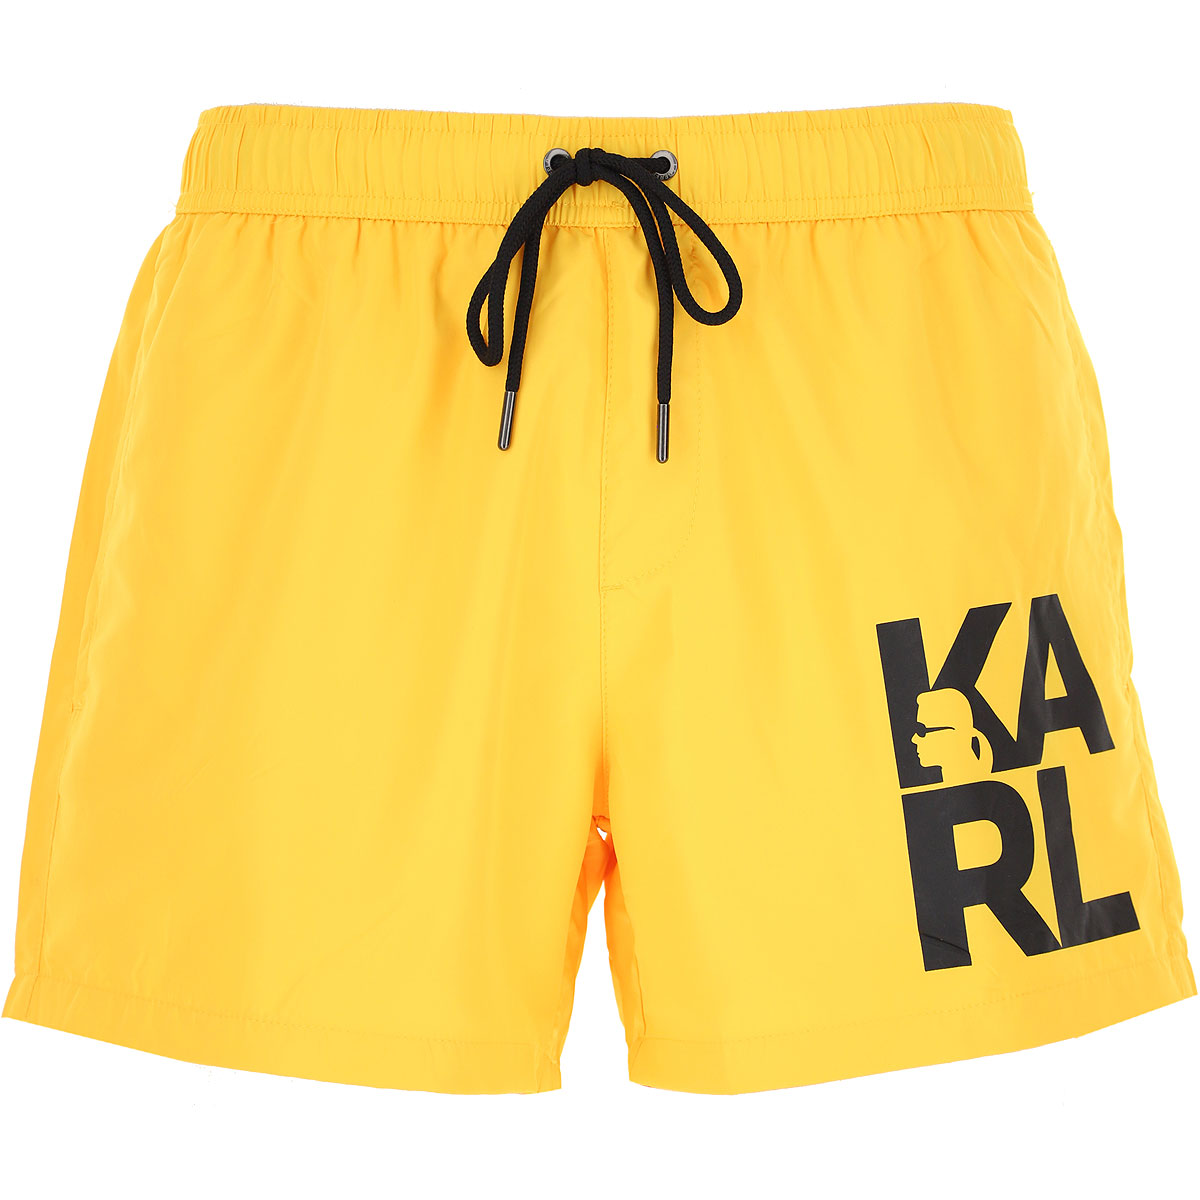 Mens Swimwear Karl Lagerfeld, Style code: kl22mbs08-yellow-